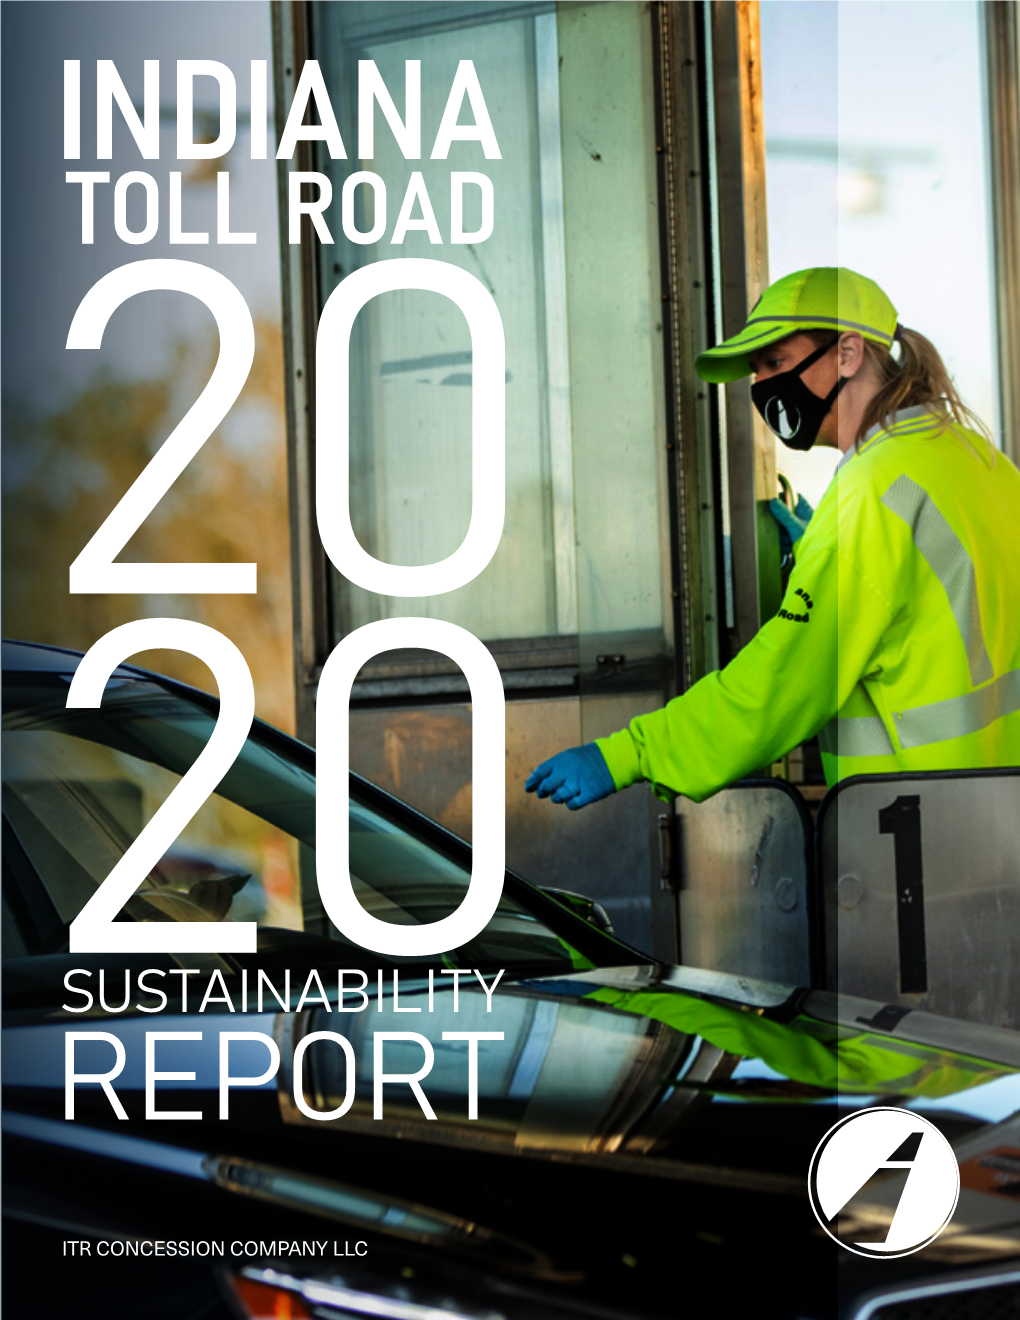 2020 Sustainability Report